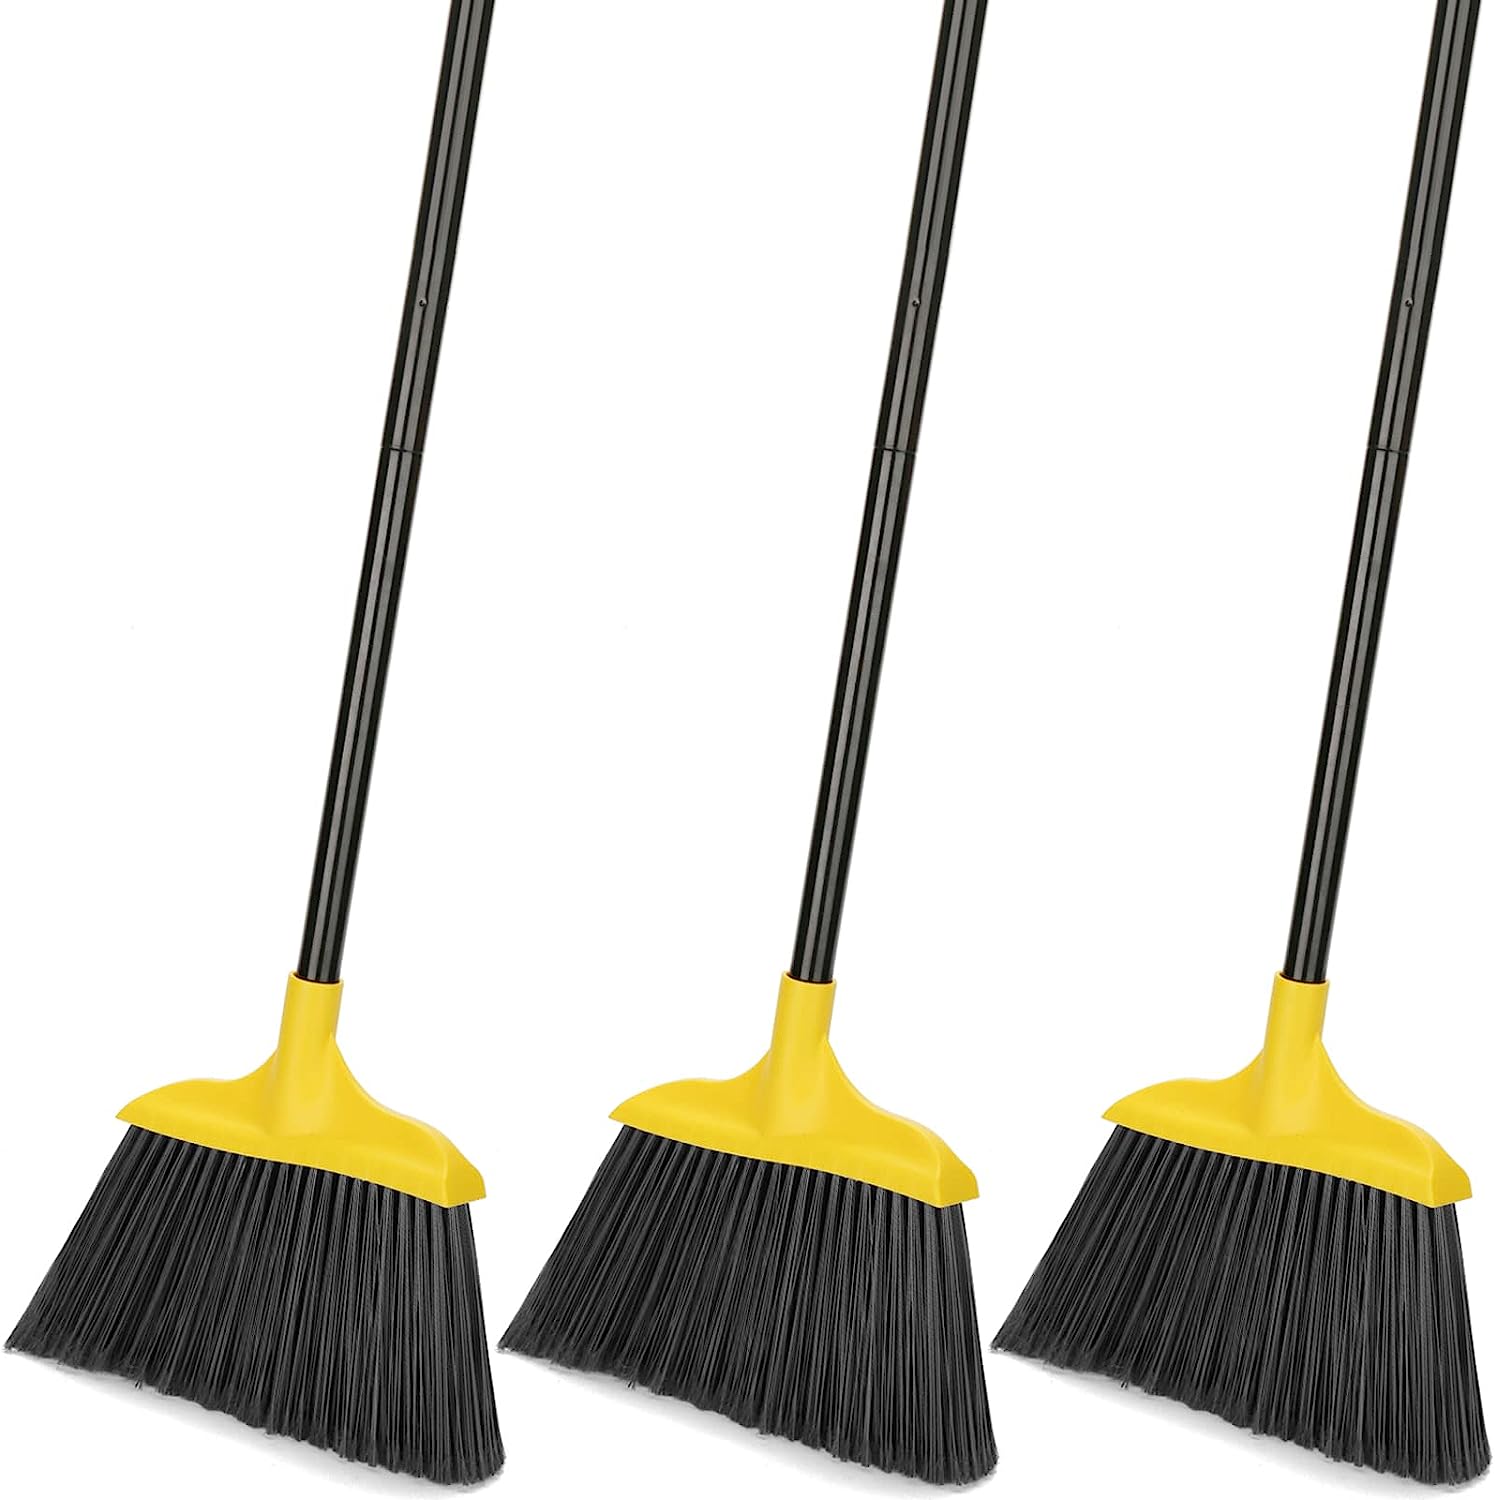 Broom Outdoor Indoor Heavy-Duty 54 Inches 3 Pack for [...]